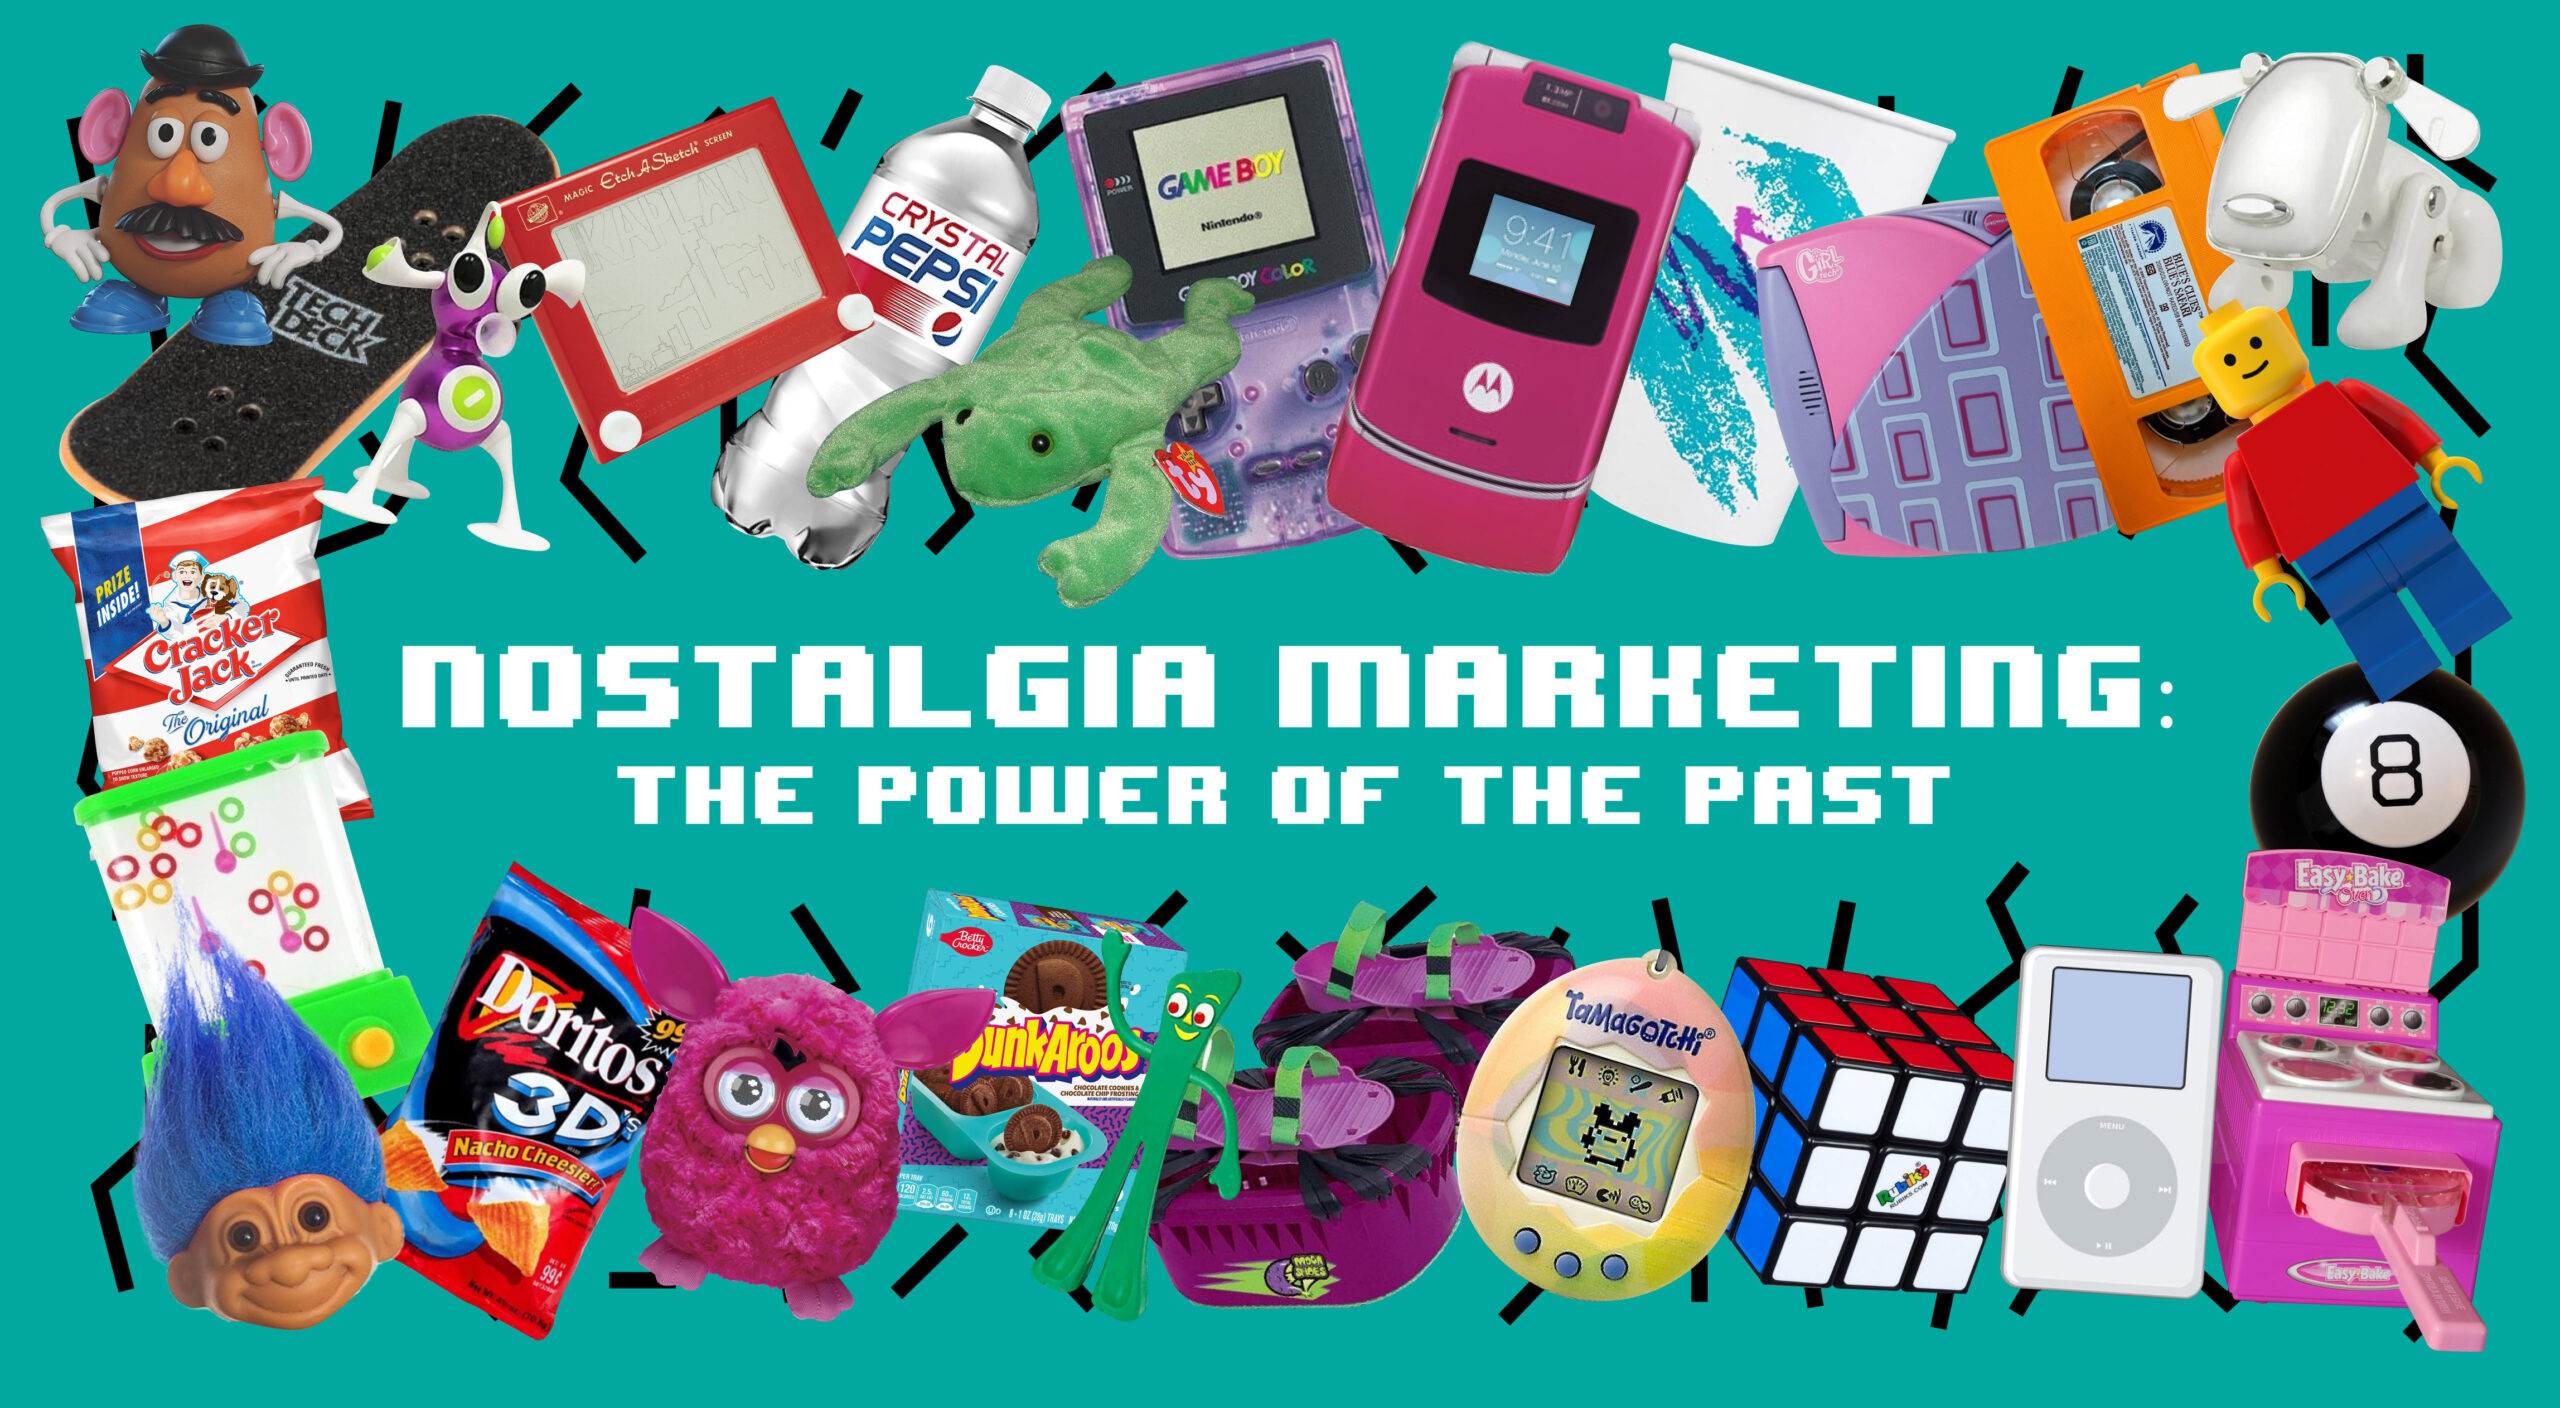 nostalgia marketing research paper